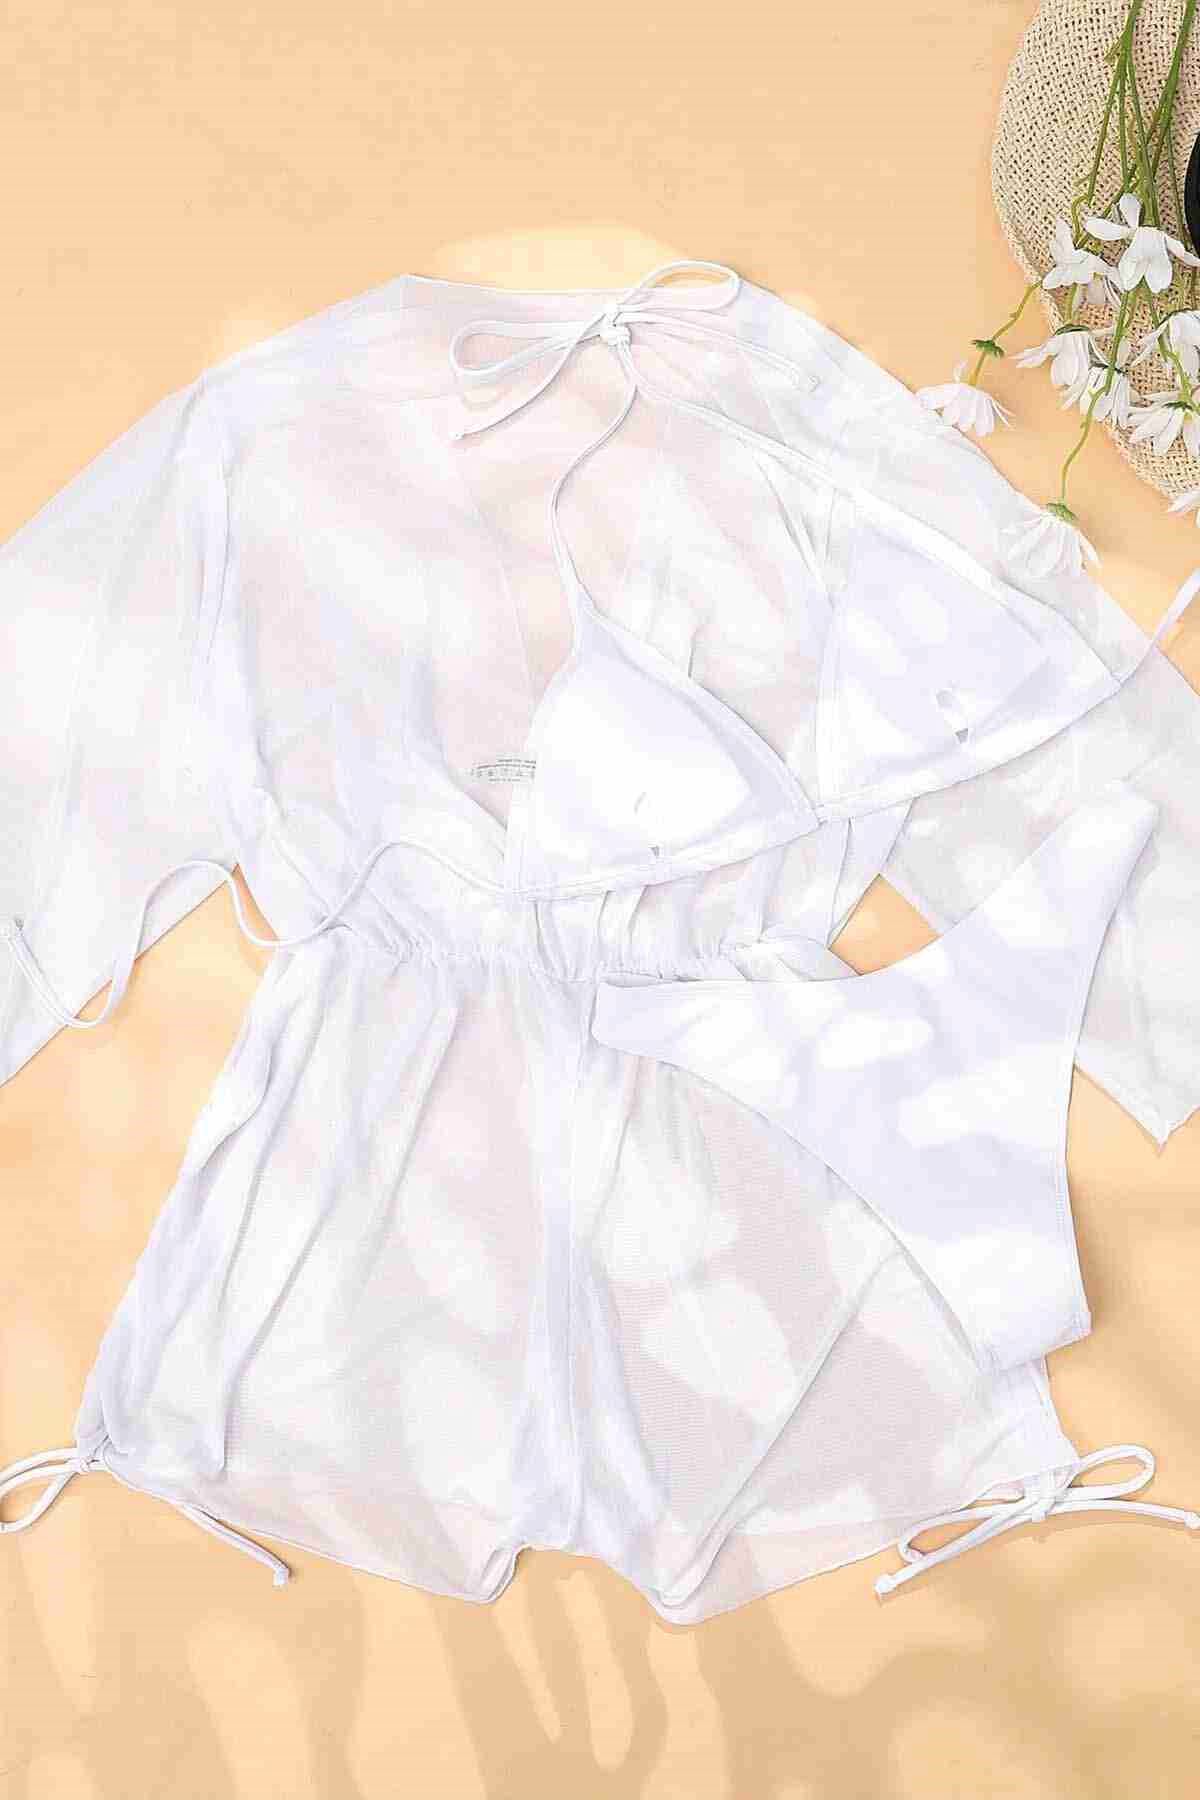 Angelsin Şifon Pareo Plaj Elbesi Cover Up Kimono Beyaz